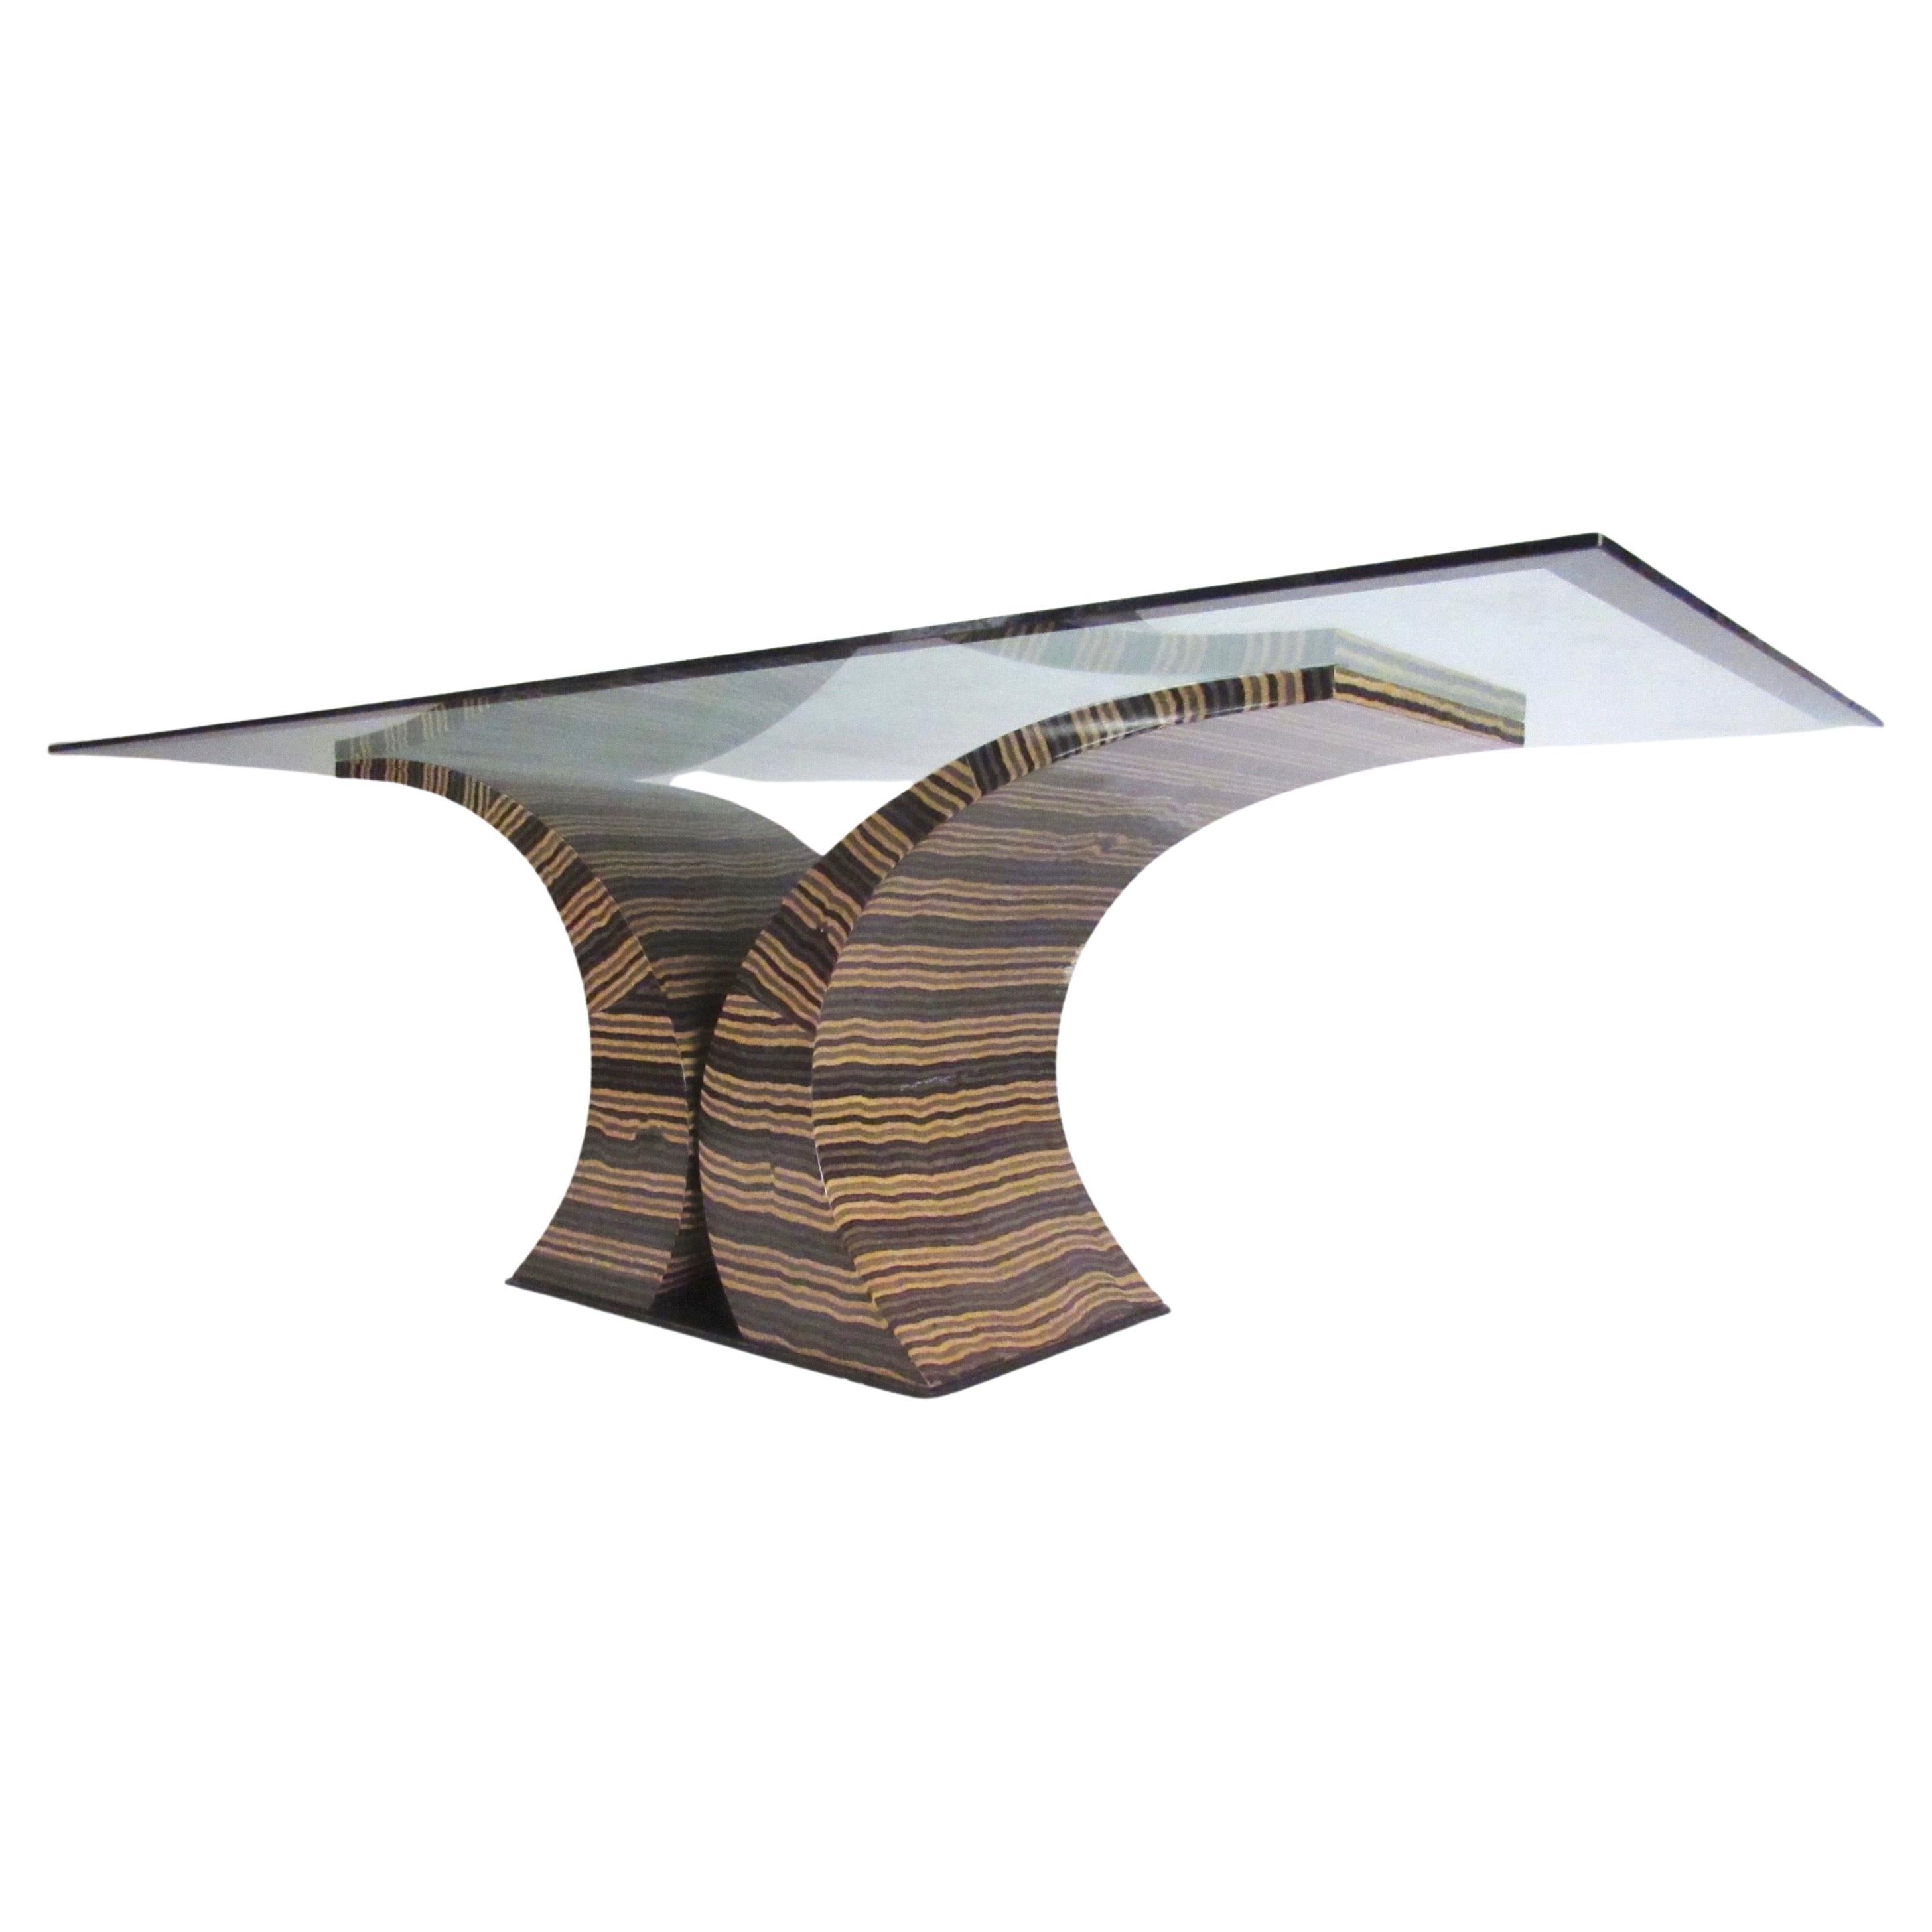 Impressive Decorator Style Dining Table